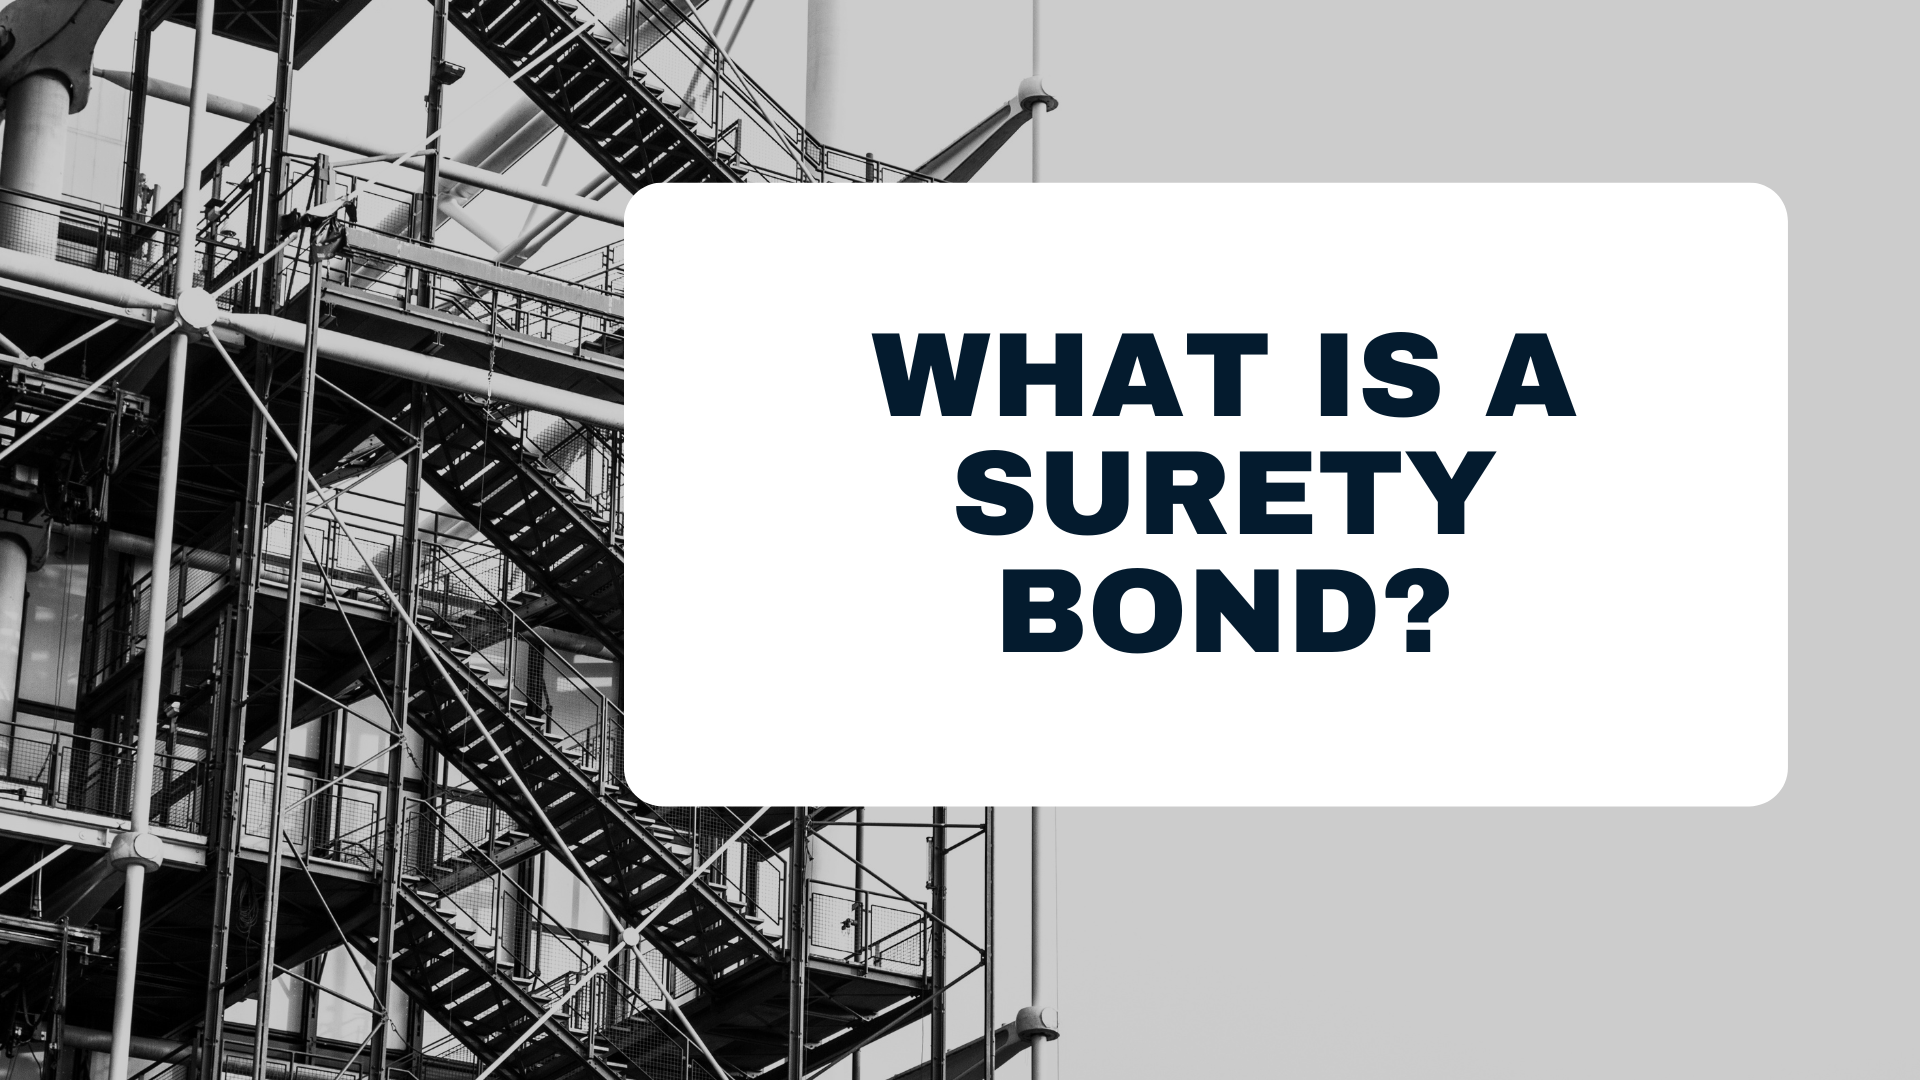 surety bond - What Is A Surety Bond - construction site